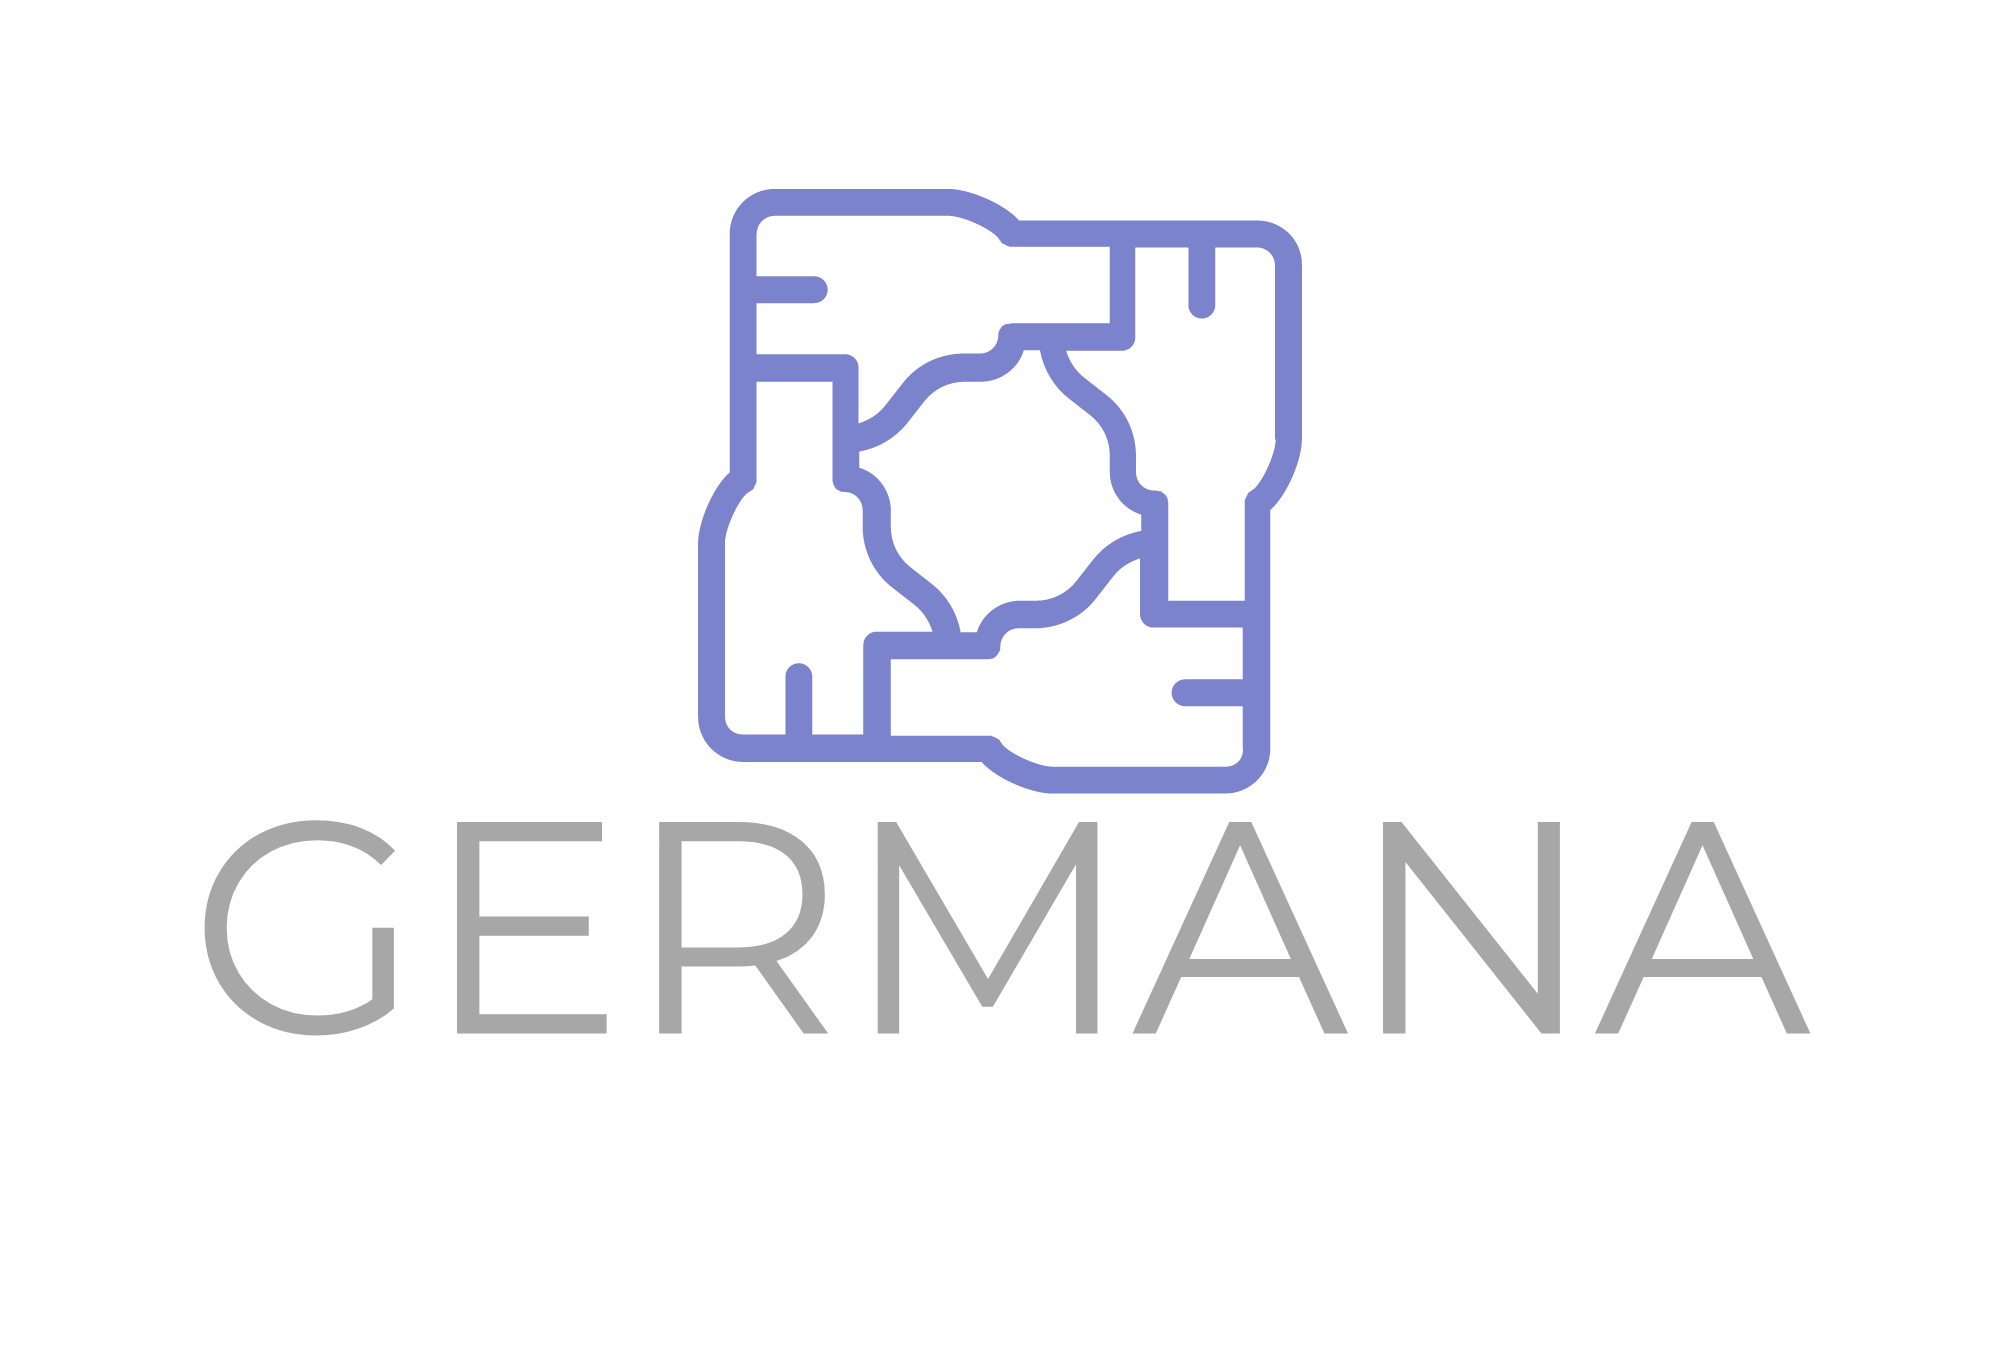 GERMANA (Copy)